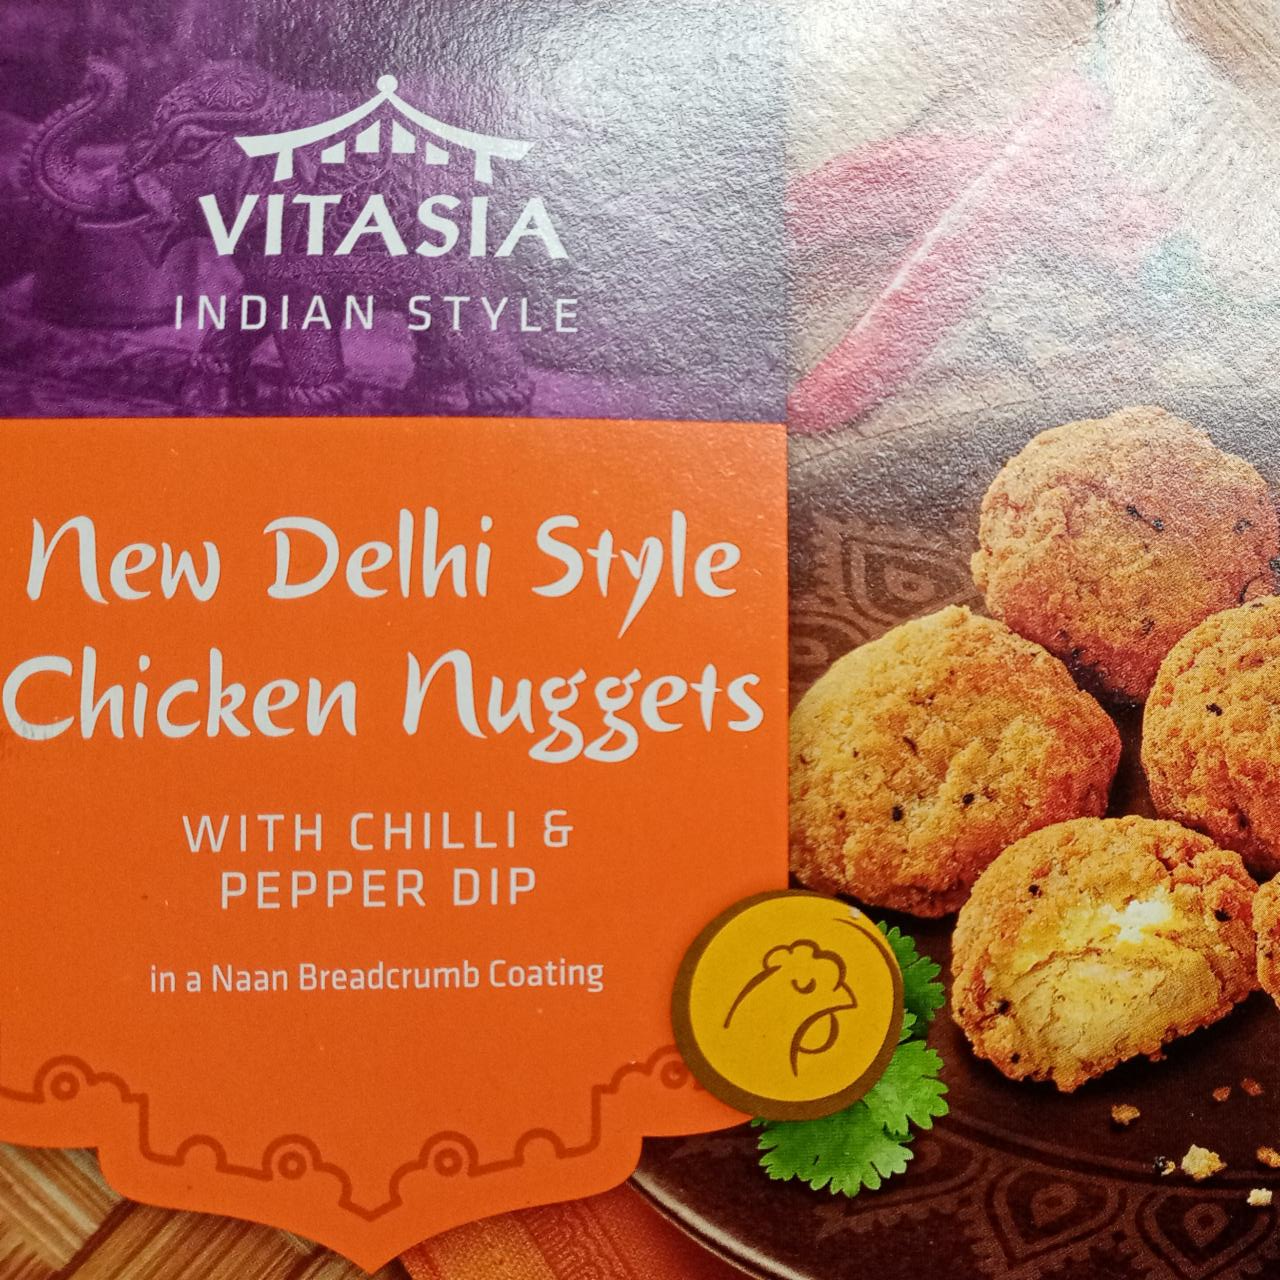 Fotografie - New Delhi chicken nuggets Vitasia indian style